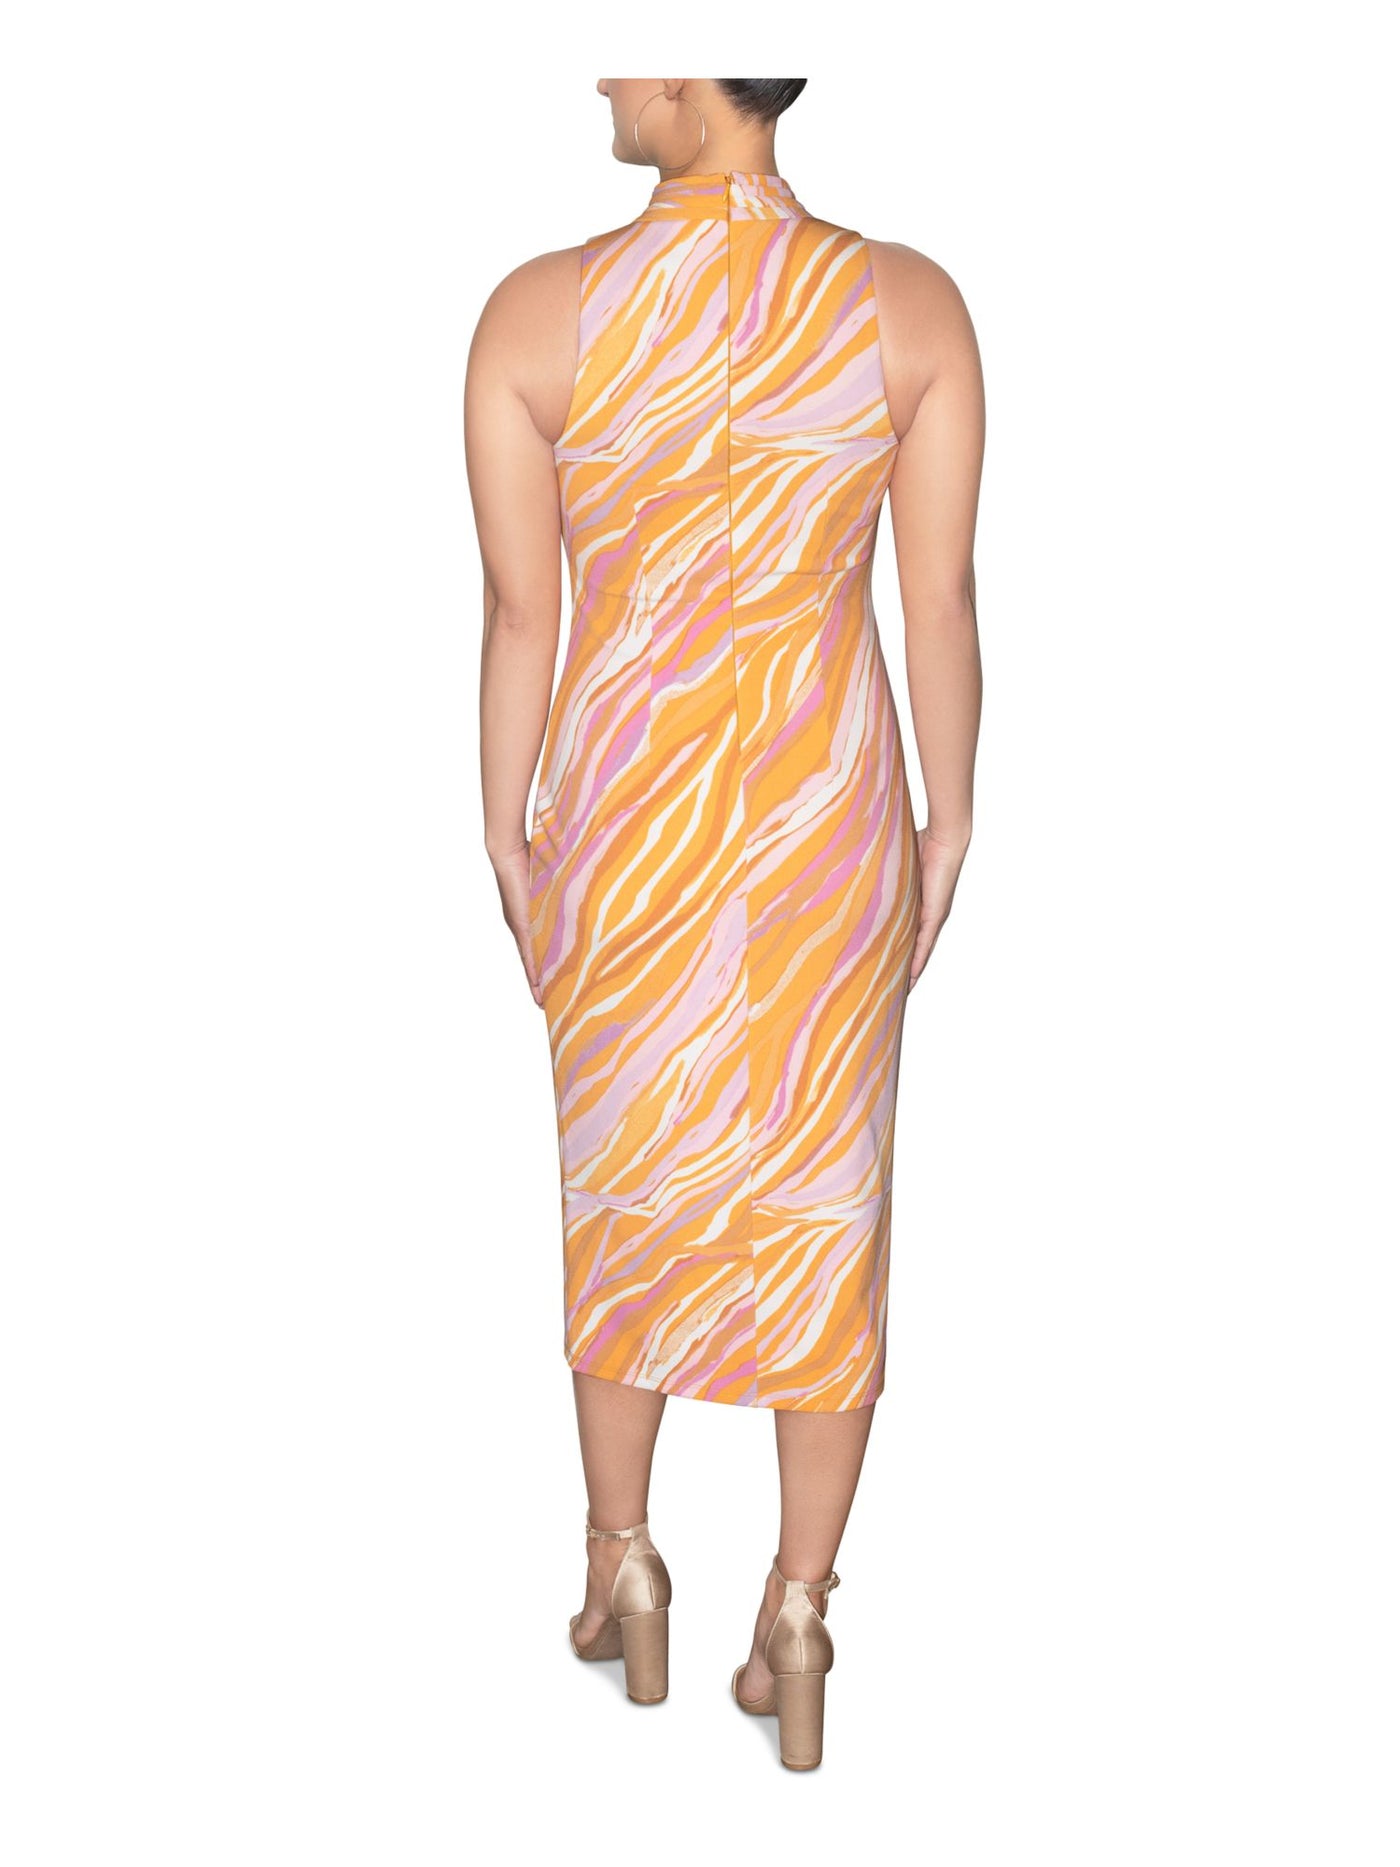 RACHEL RACHEL ROY Womens Gold Zippered Cut Out Pleated Crossover Printed Sleeveless Mock Neck Midi Evening Sheath Dress M